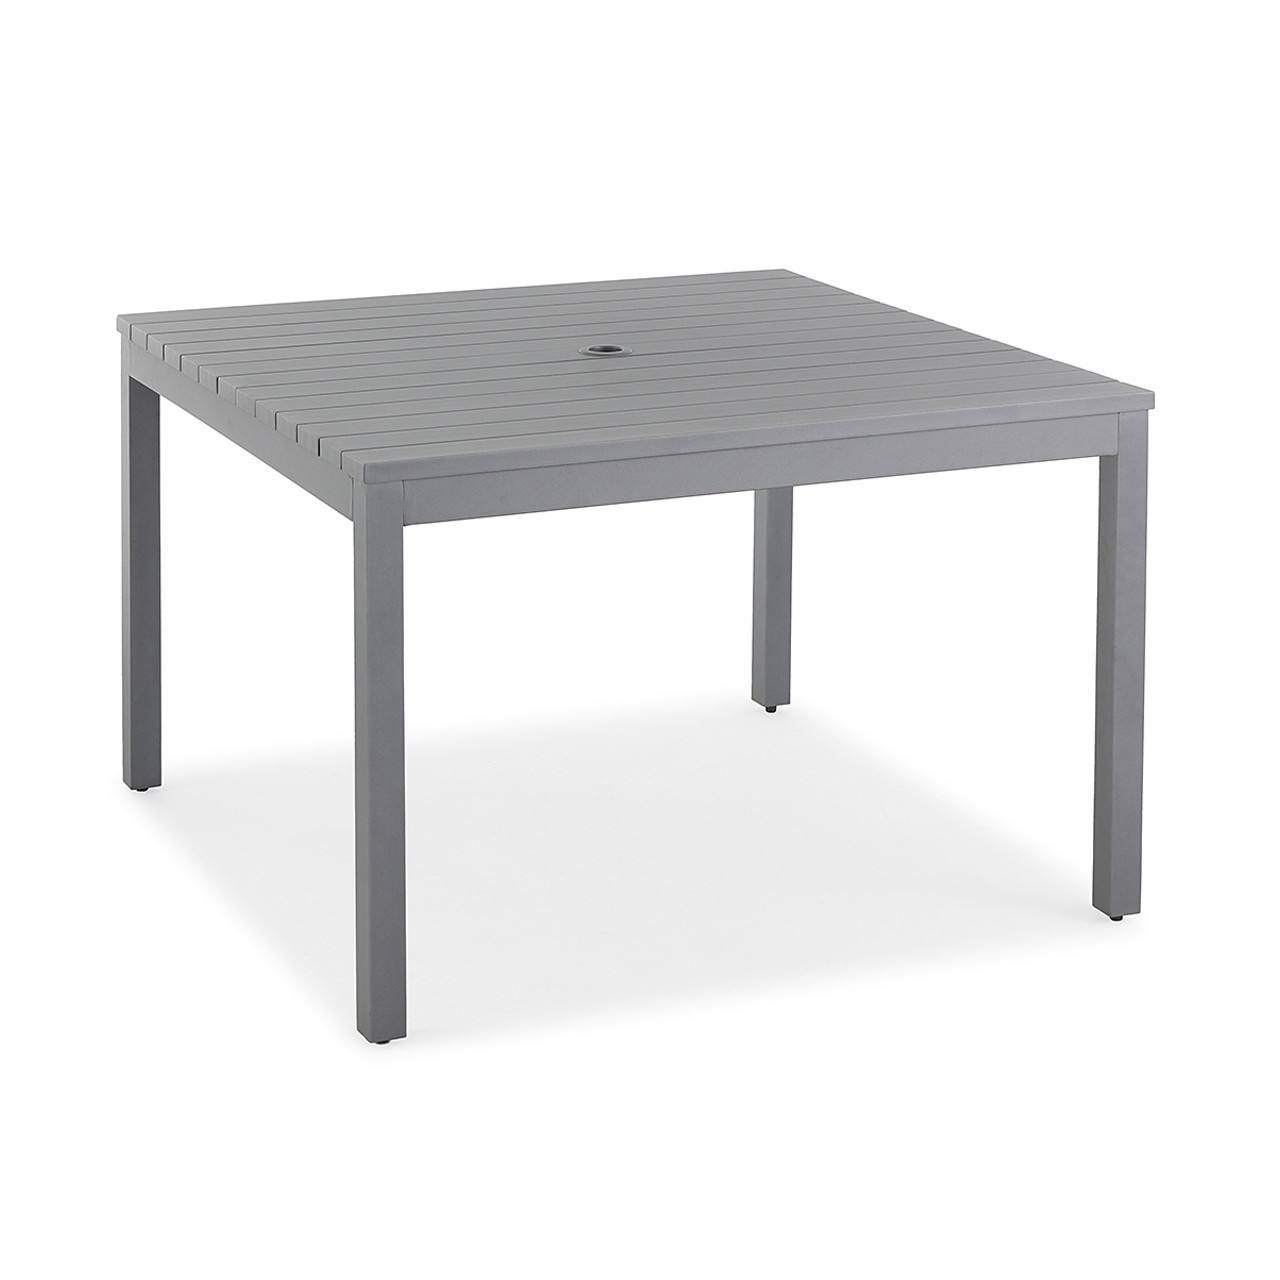 Soho Slate Grey Aluminum 46 in. Sq. Dining Table